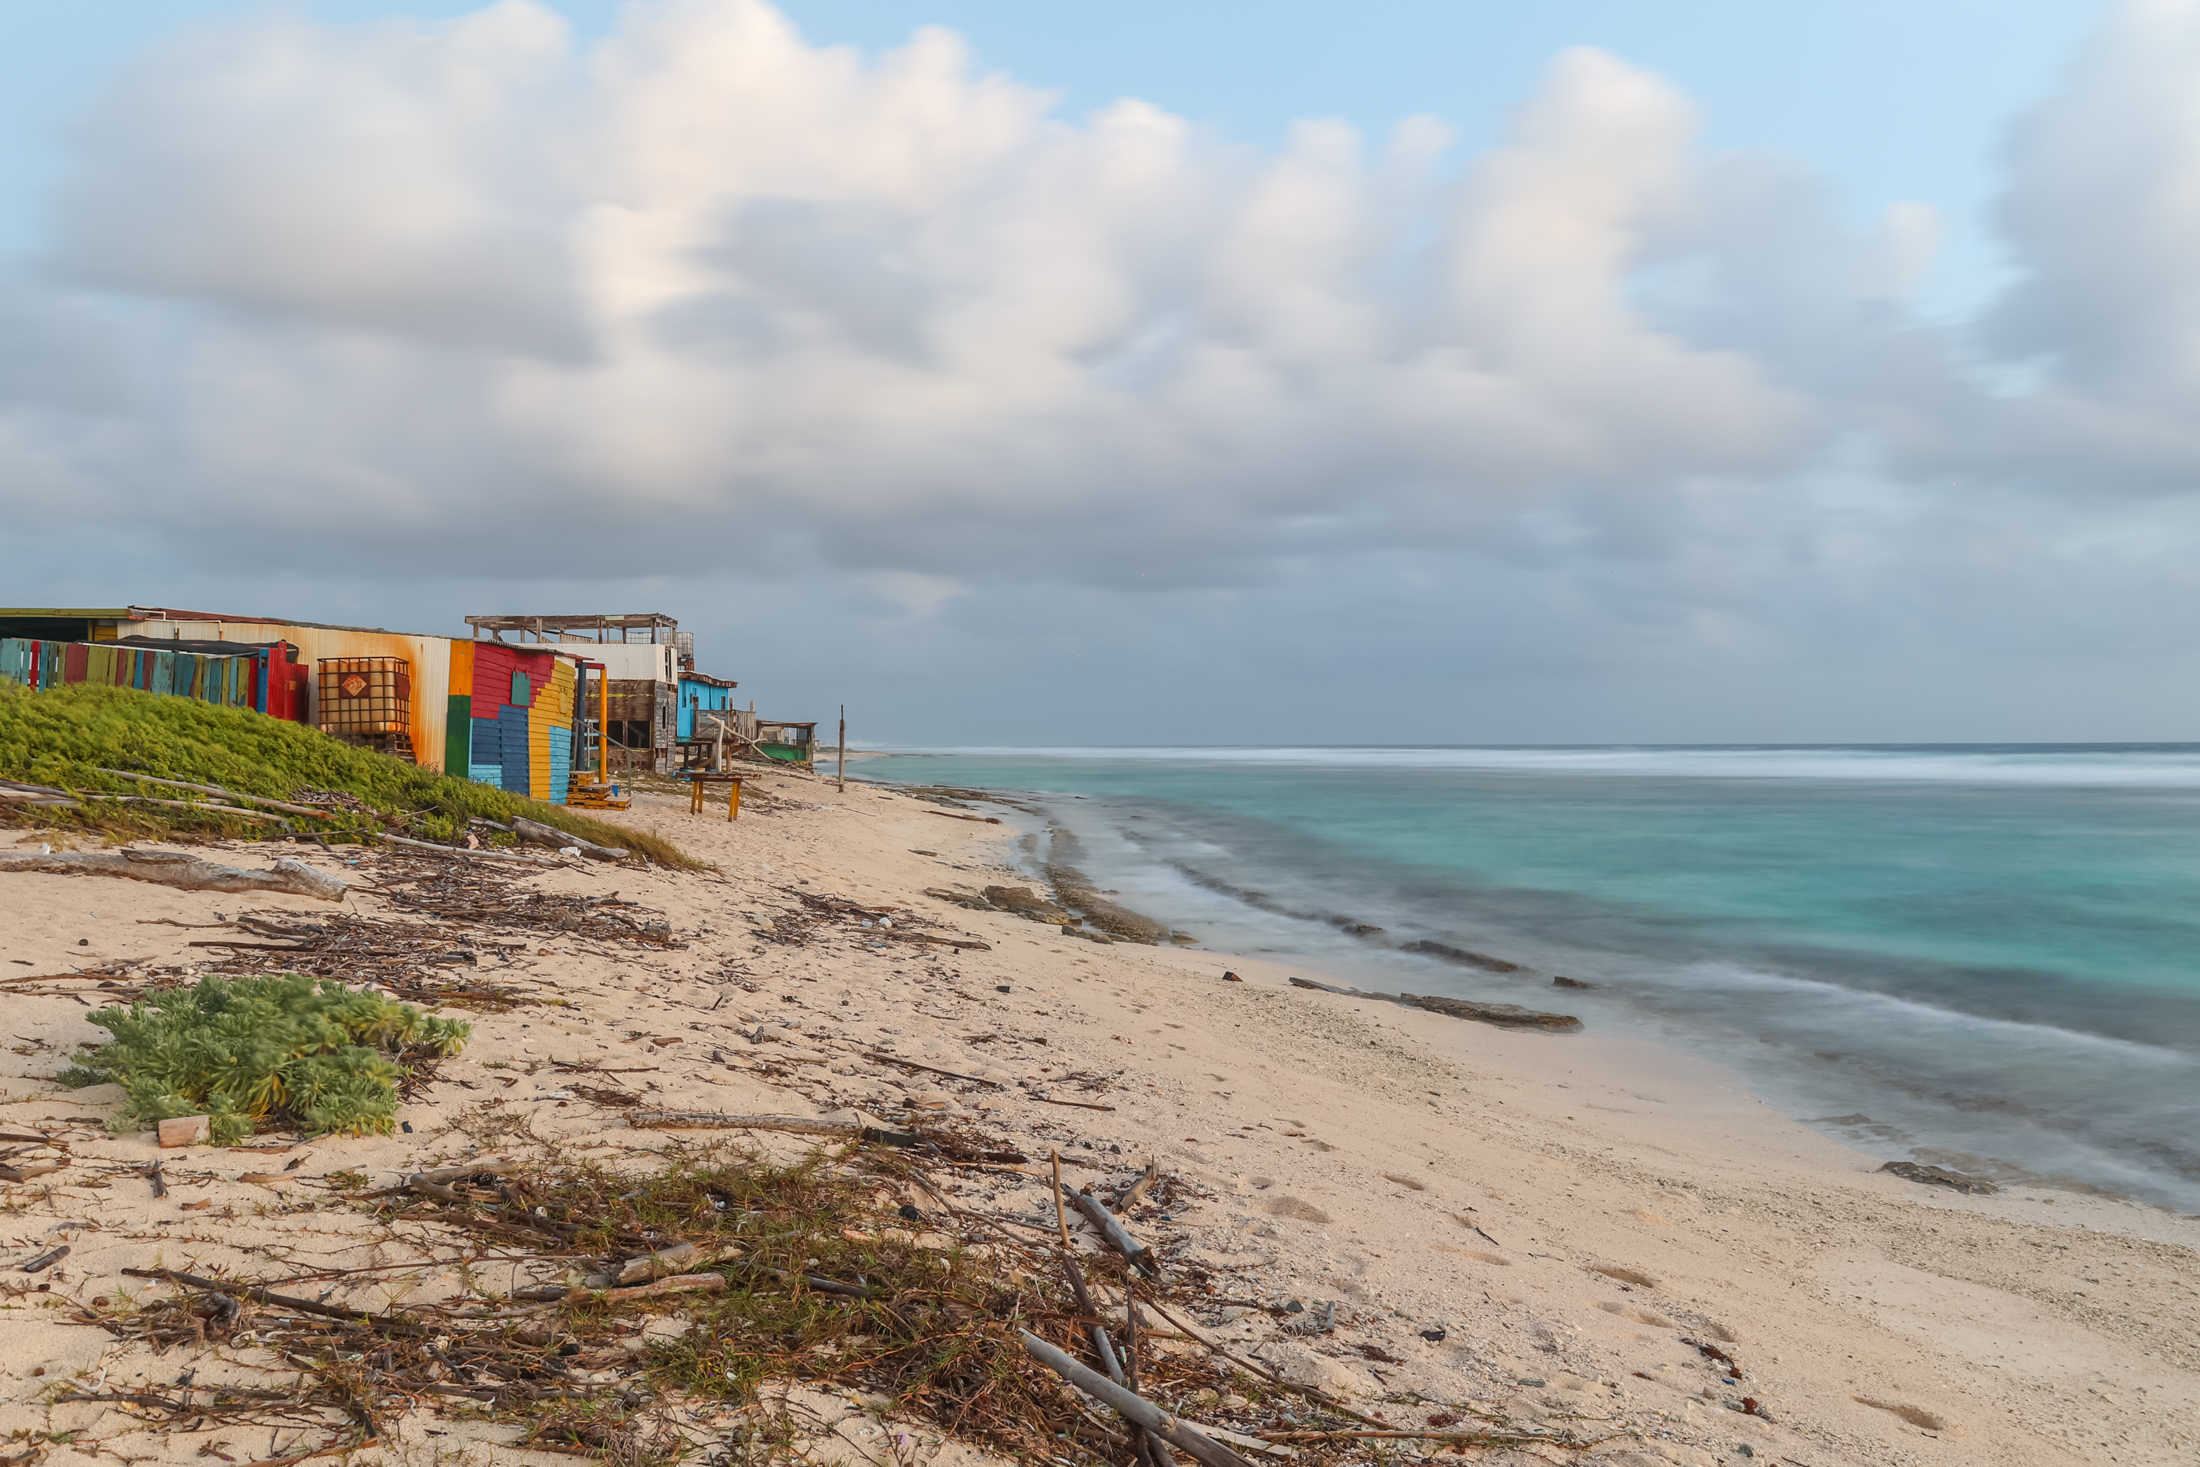 aruba island ghost village abandoned cabins and shacks